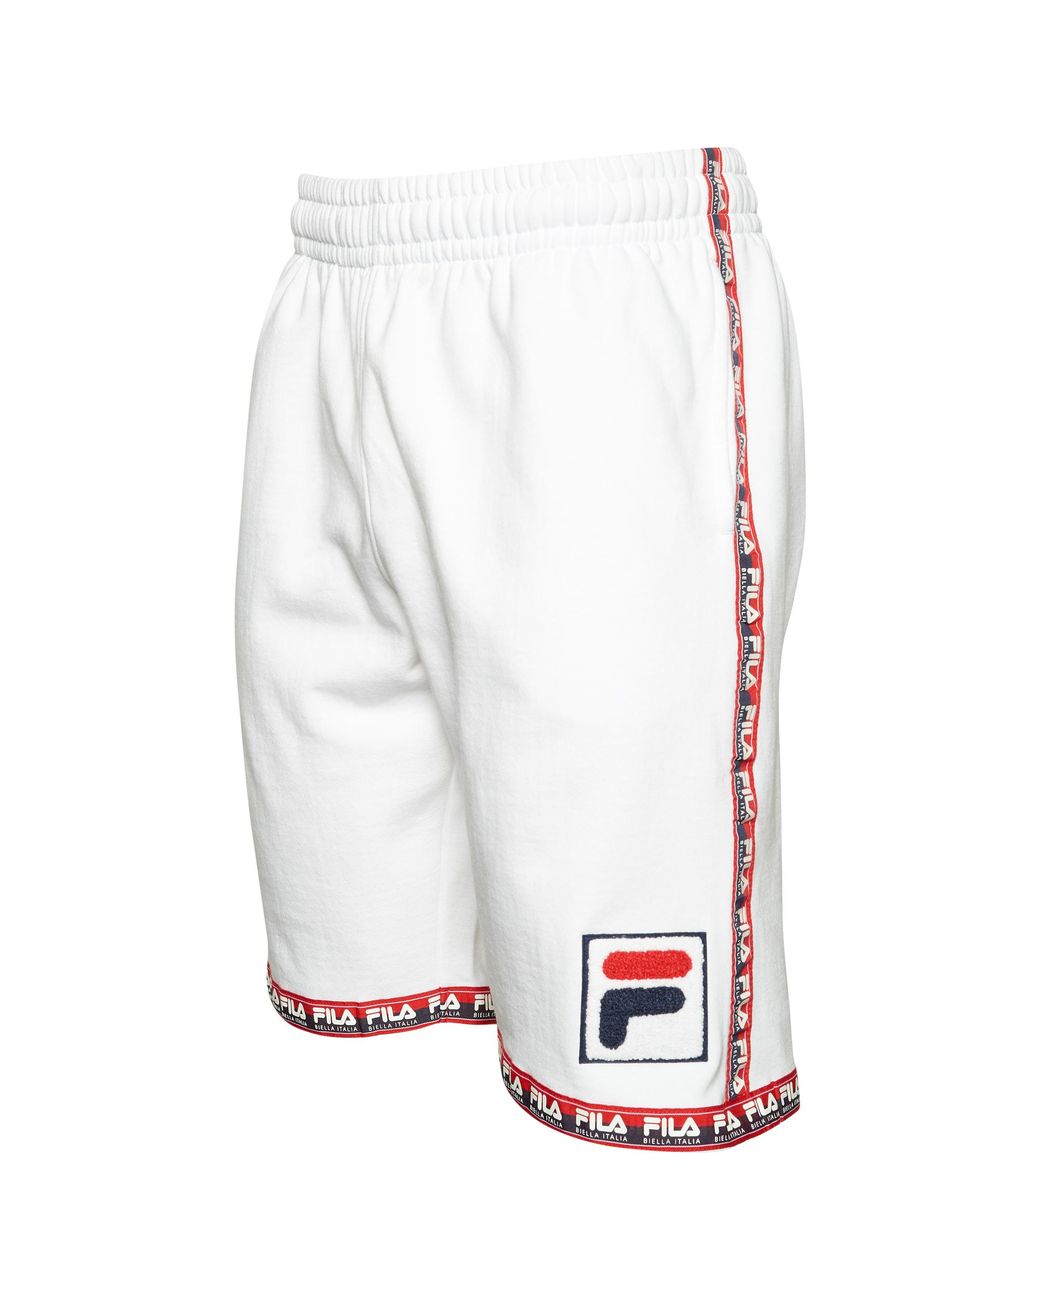 Fila Biella Italia Fleece Shorts in White/Navy/Red (White) for Men - Save  38% - Lyst